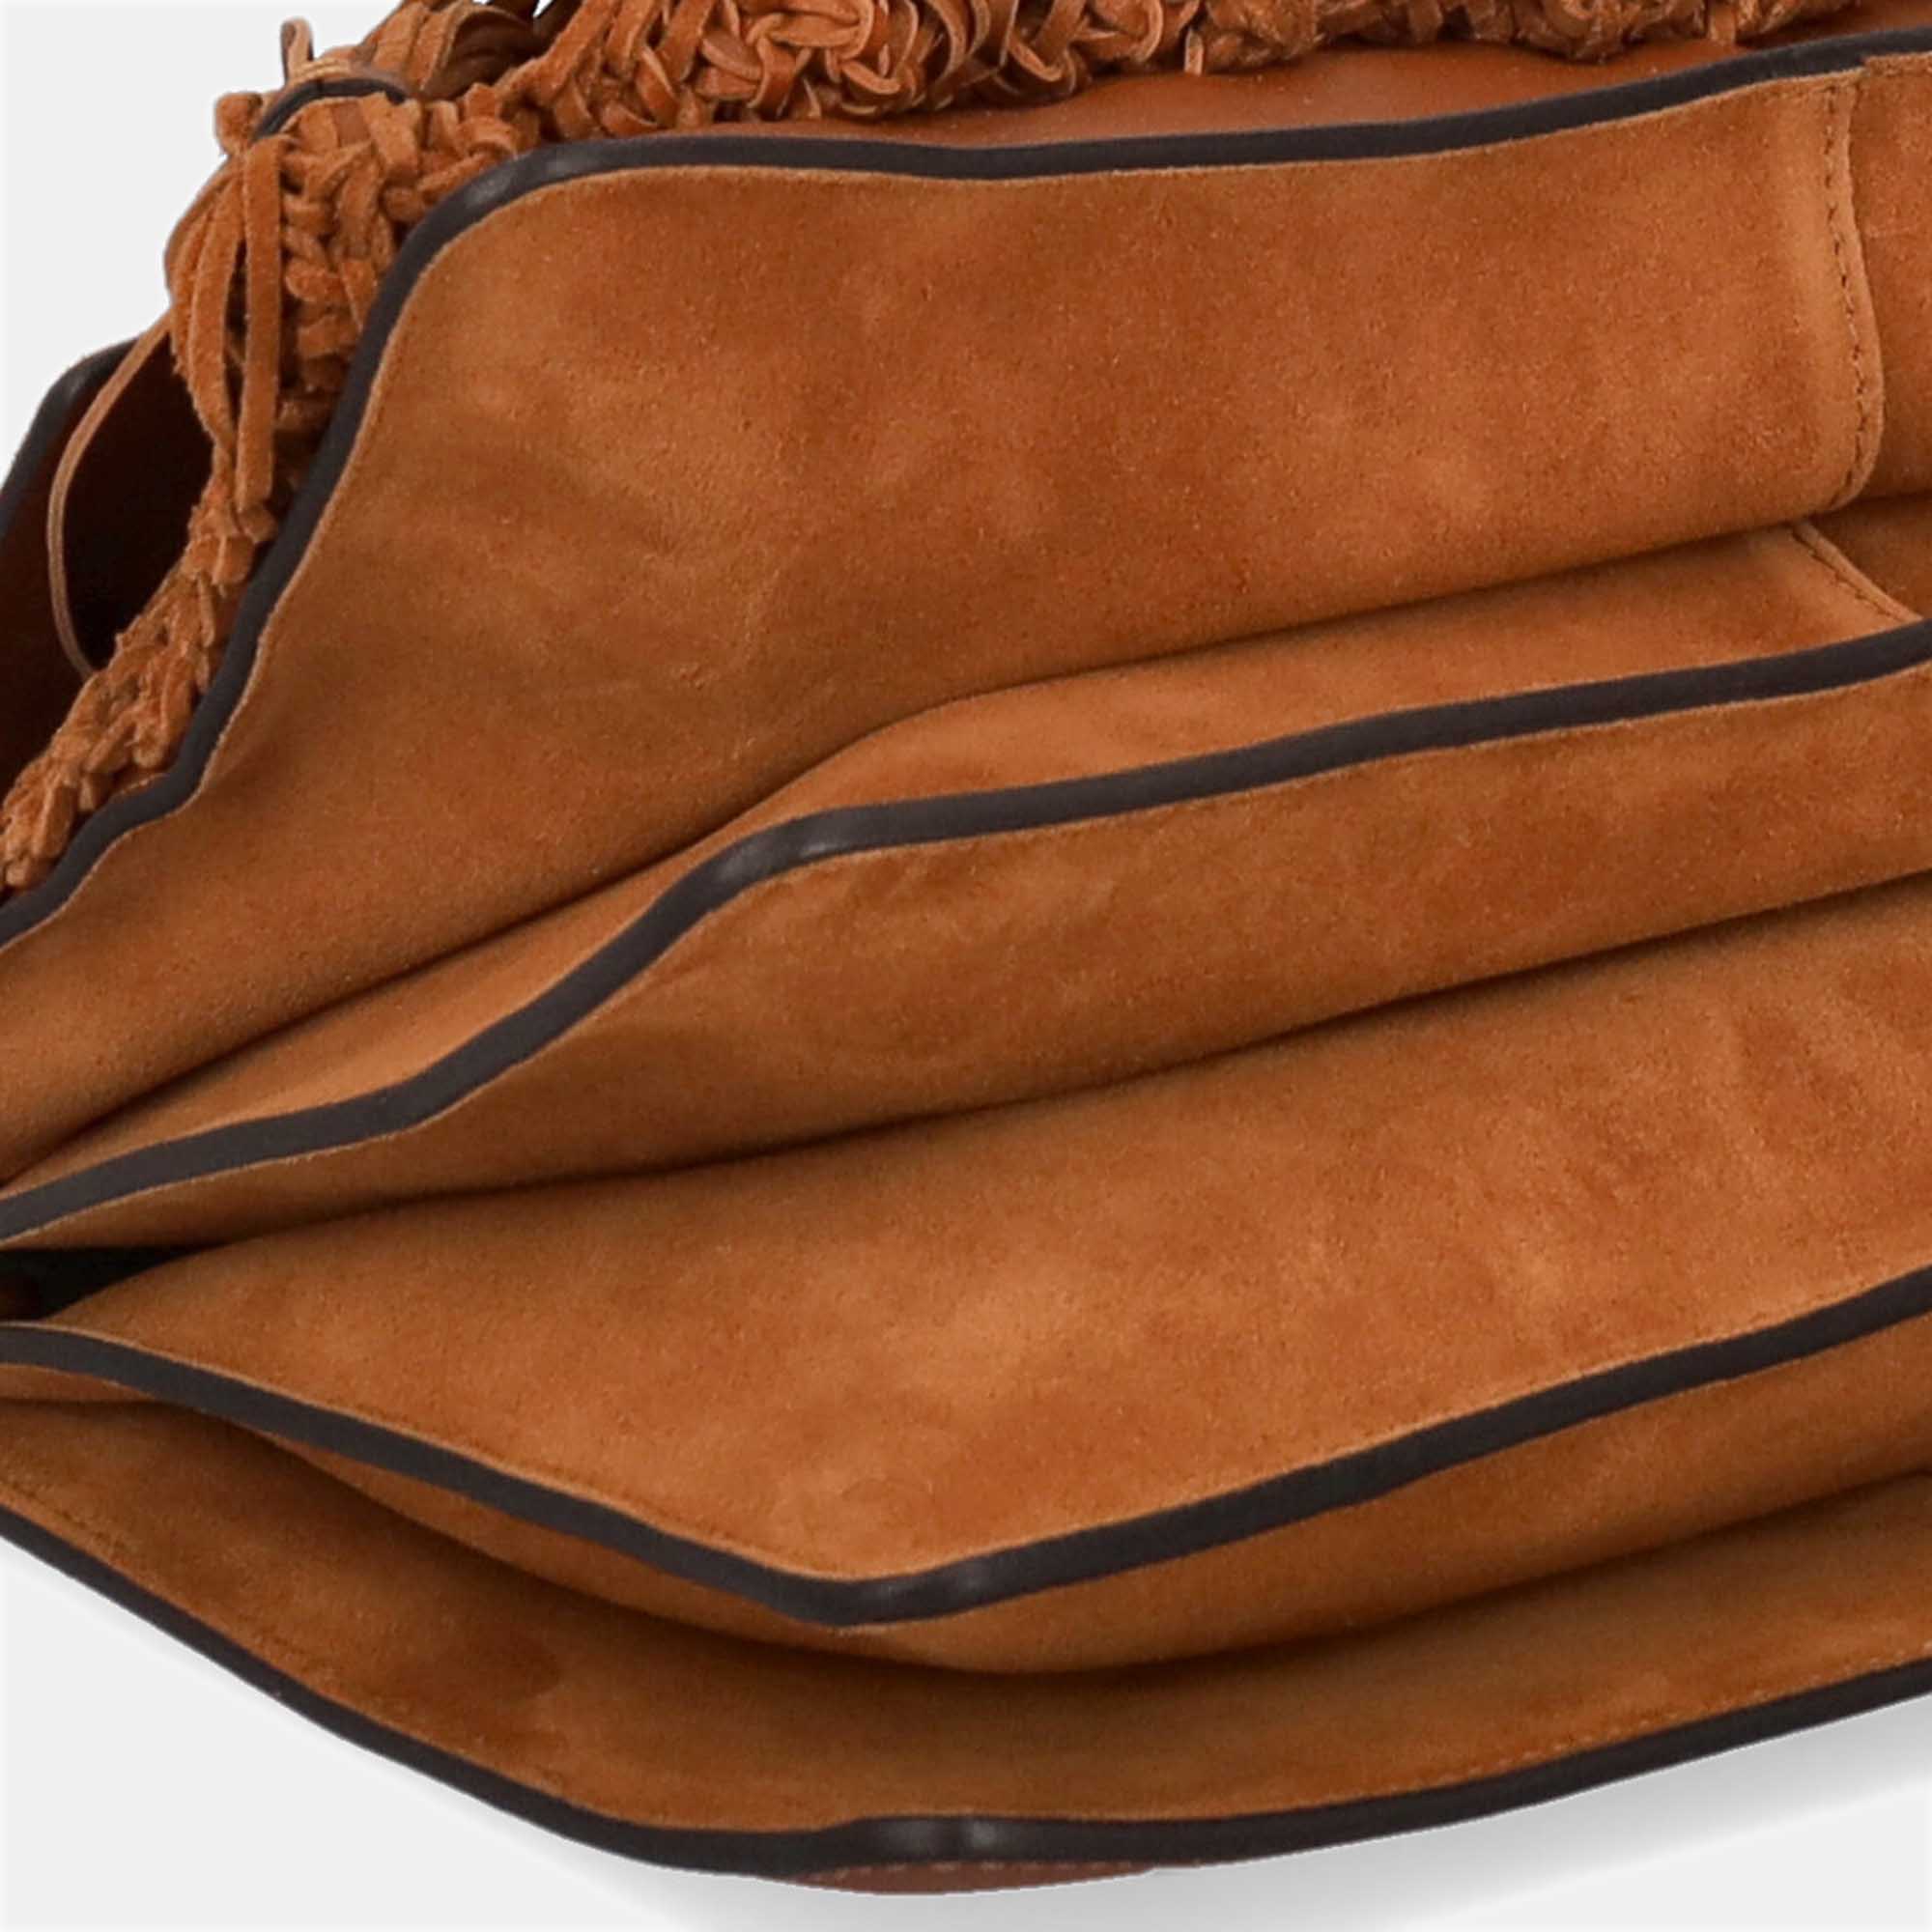 Chloe Faye -  Women's Leather Handbag - Brown - One Size